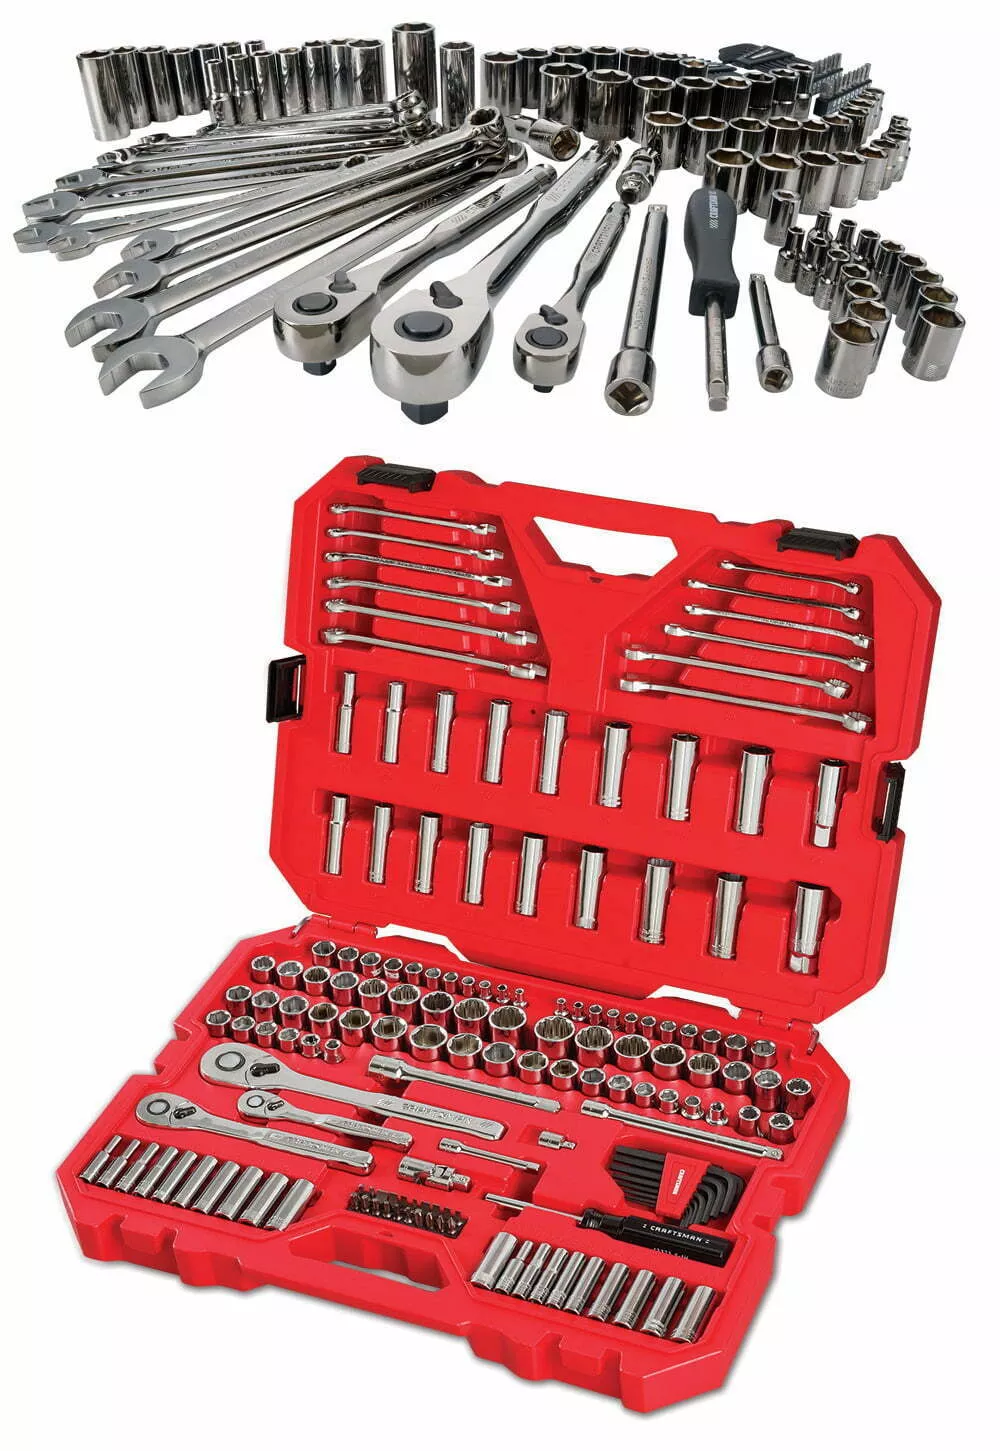 Craftsman 121 piece Gunmetal Chrome Mechanics Tool Set